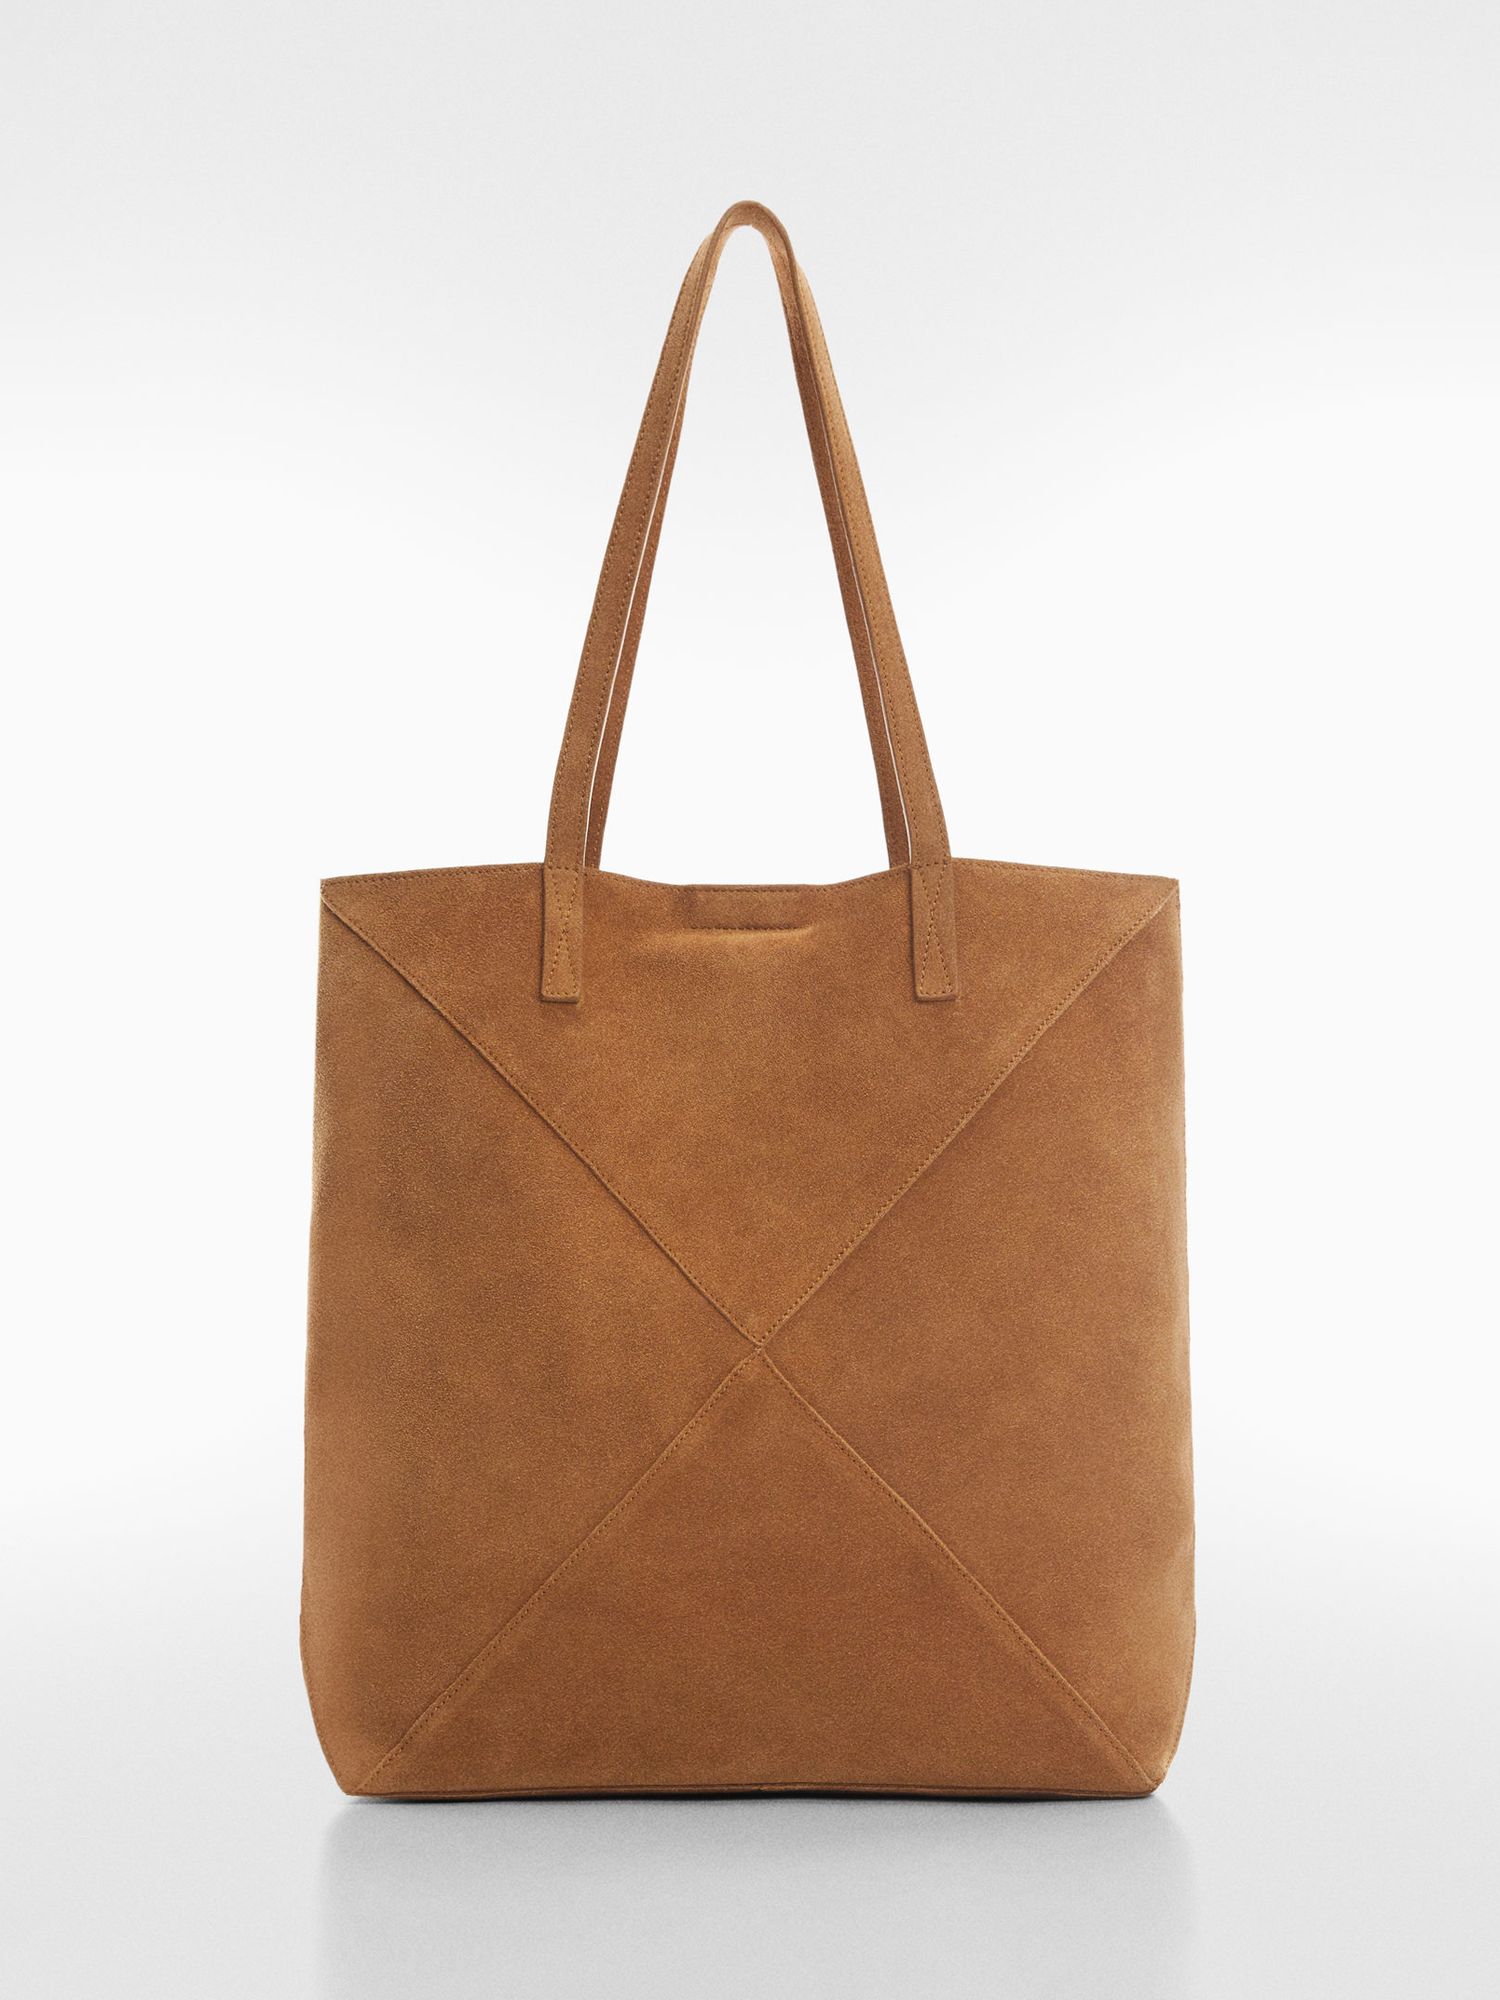 Mango Carbo Suede Shopper Bag, Medium Brown, One Size